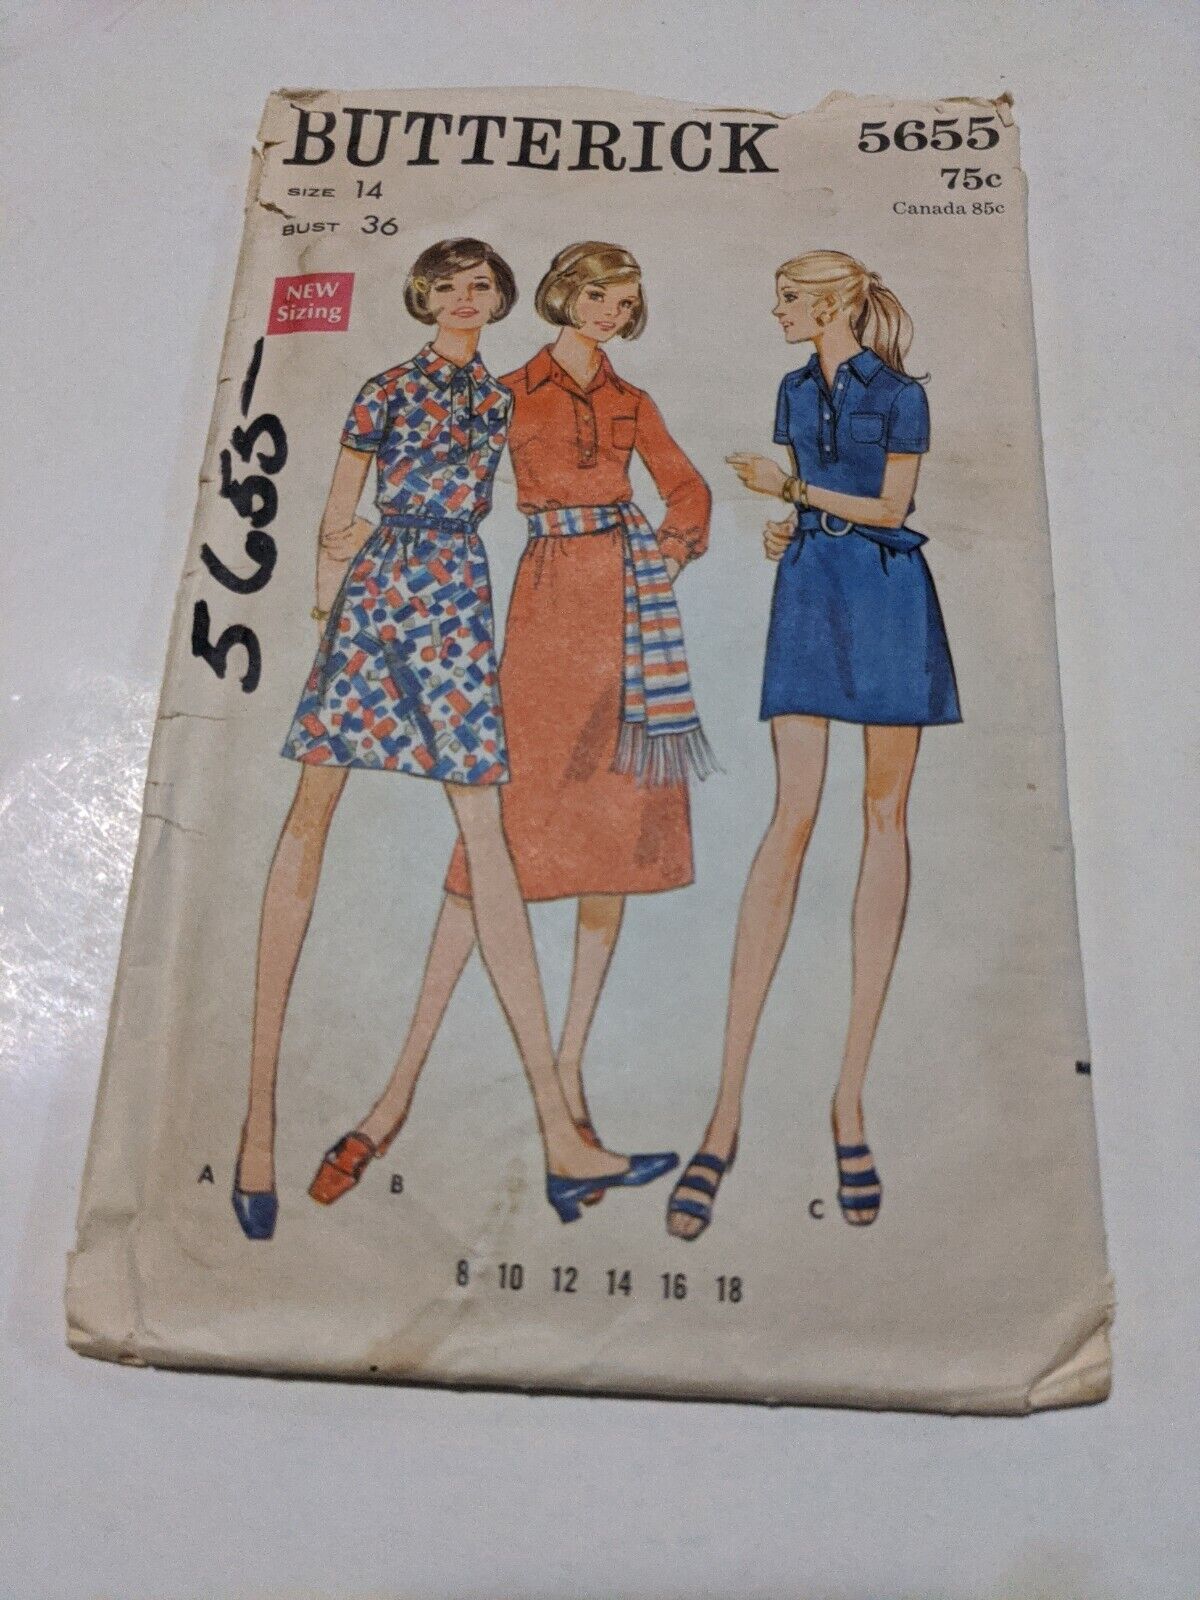  Vintage BUTTERICK Pattern 5655 Misses\' One Piece A Line Dress Size 14 Bust 36 